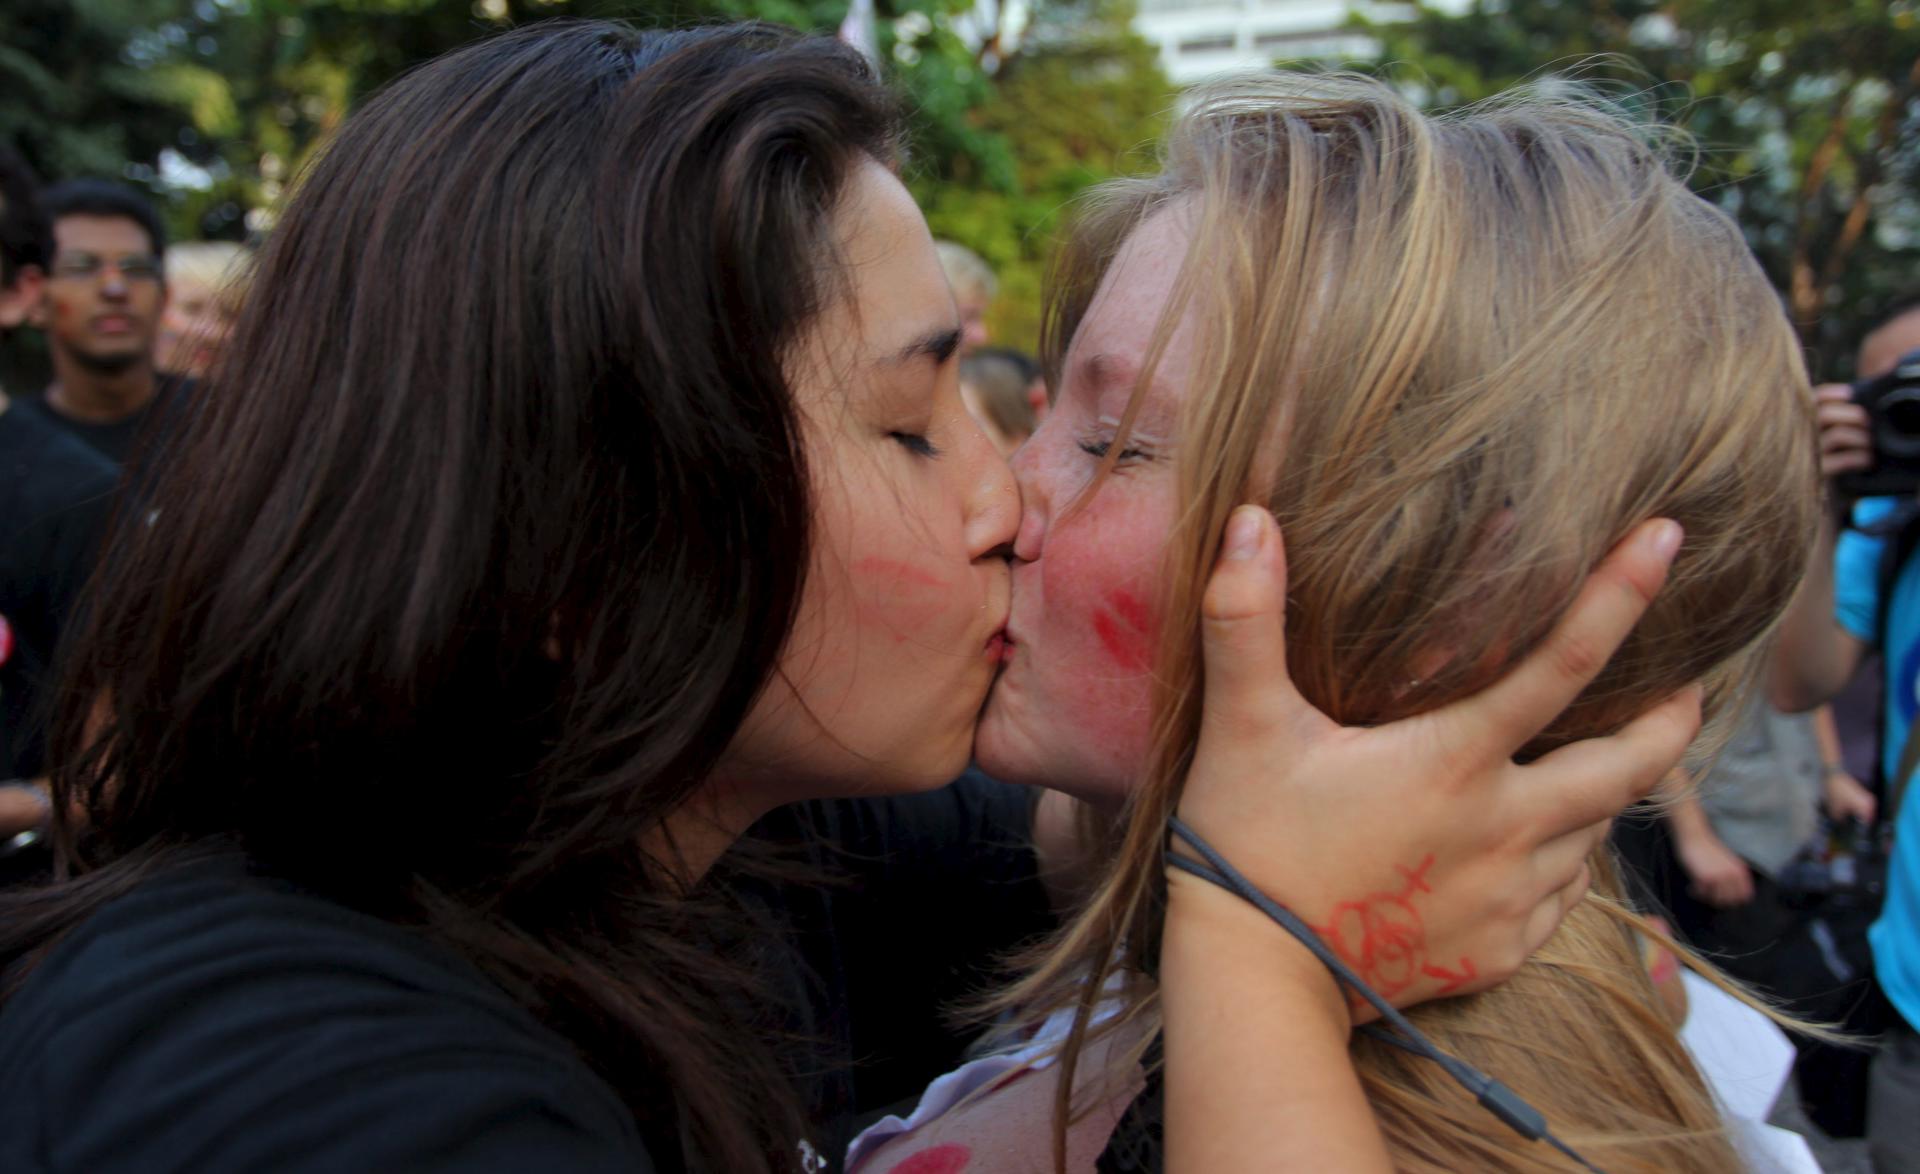 A file photo shows two women kissing during a gay pride parade in Hong Kong, China. EFE/FILE/YM Yik